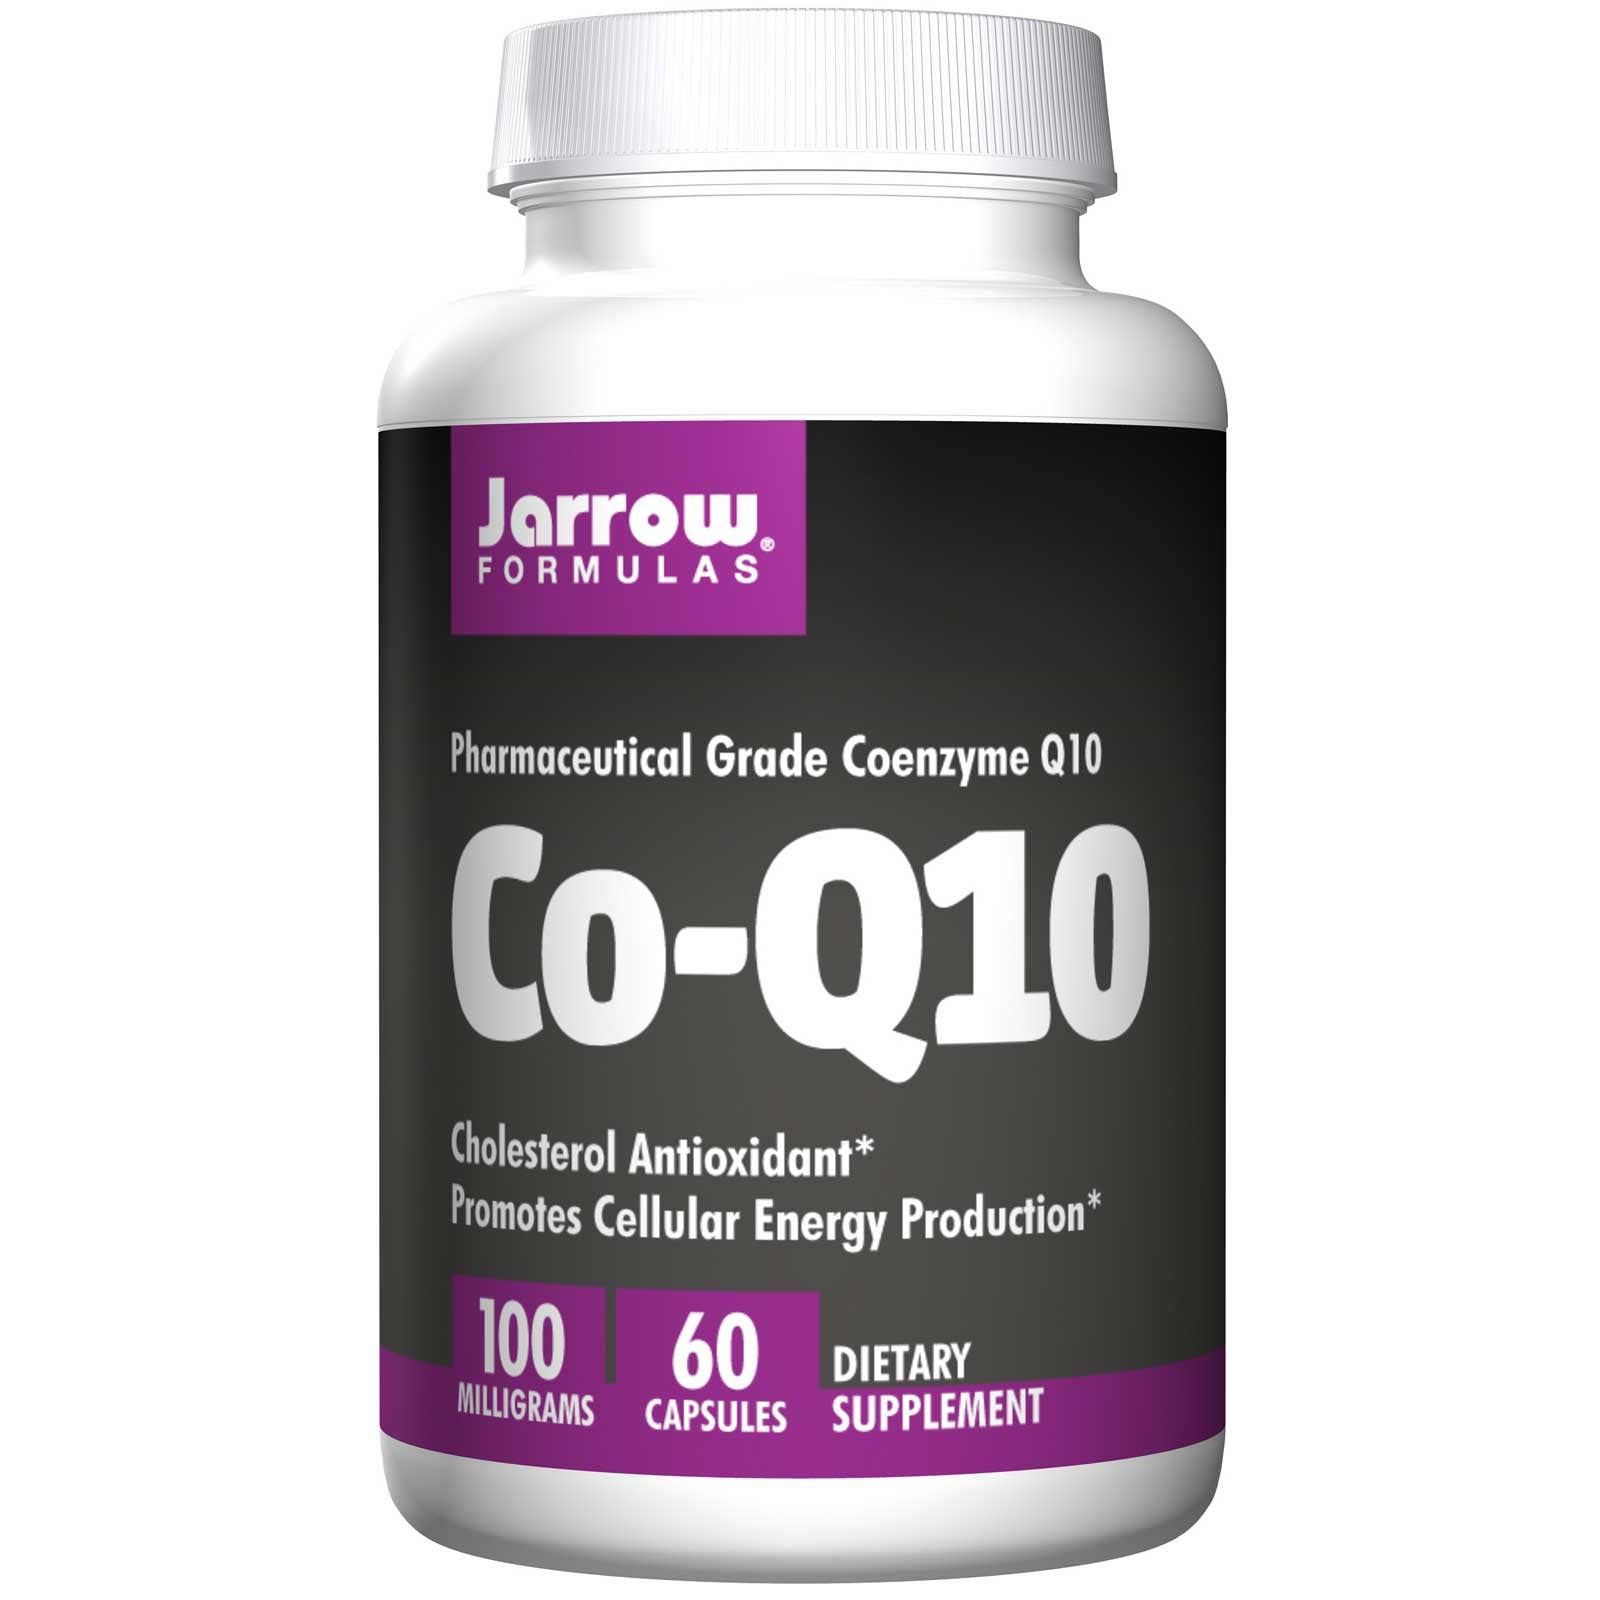 Jarrow Formulas Co-q10 Supplement - 100mg, 60 Capsules